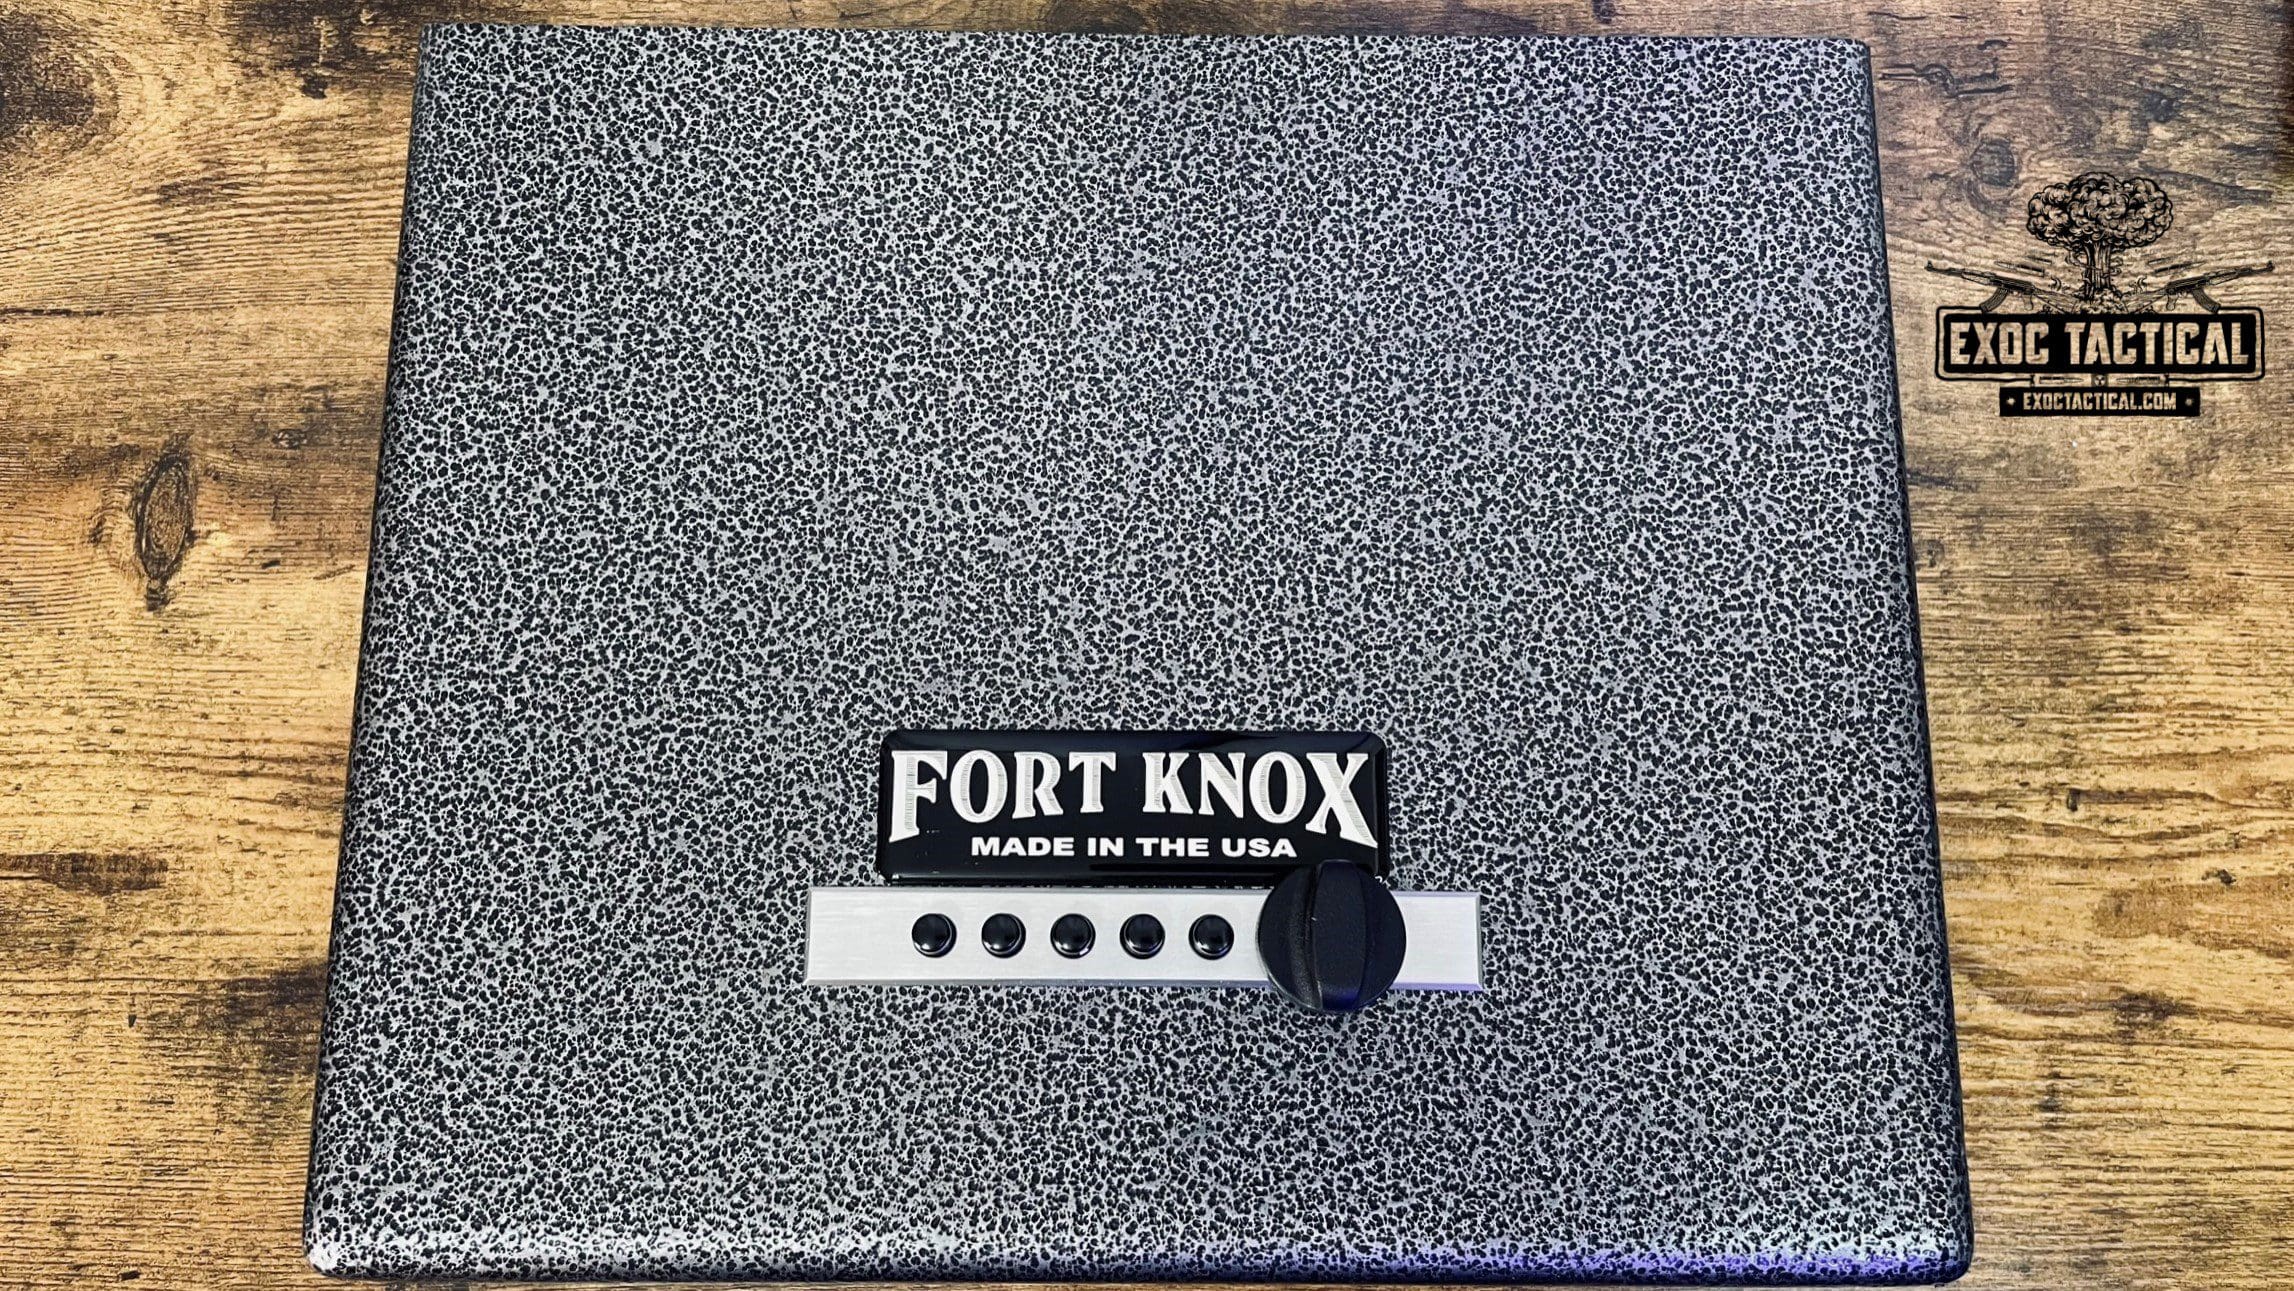 FORT KNOX Original Pistol Box